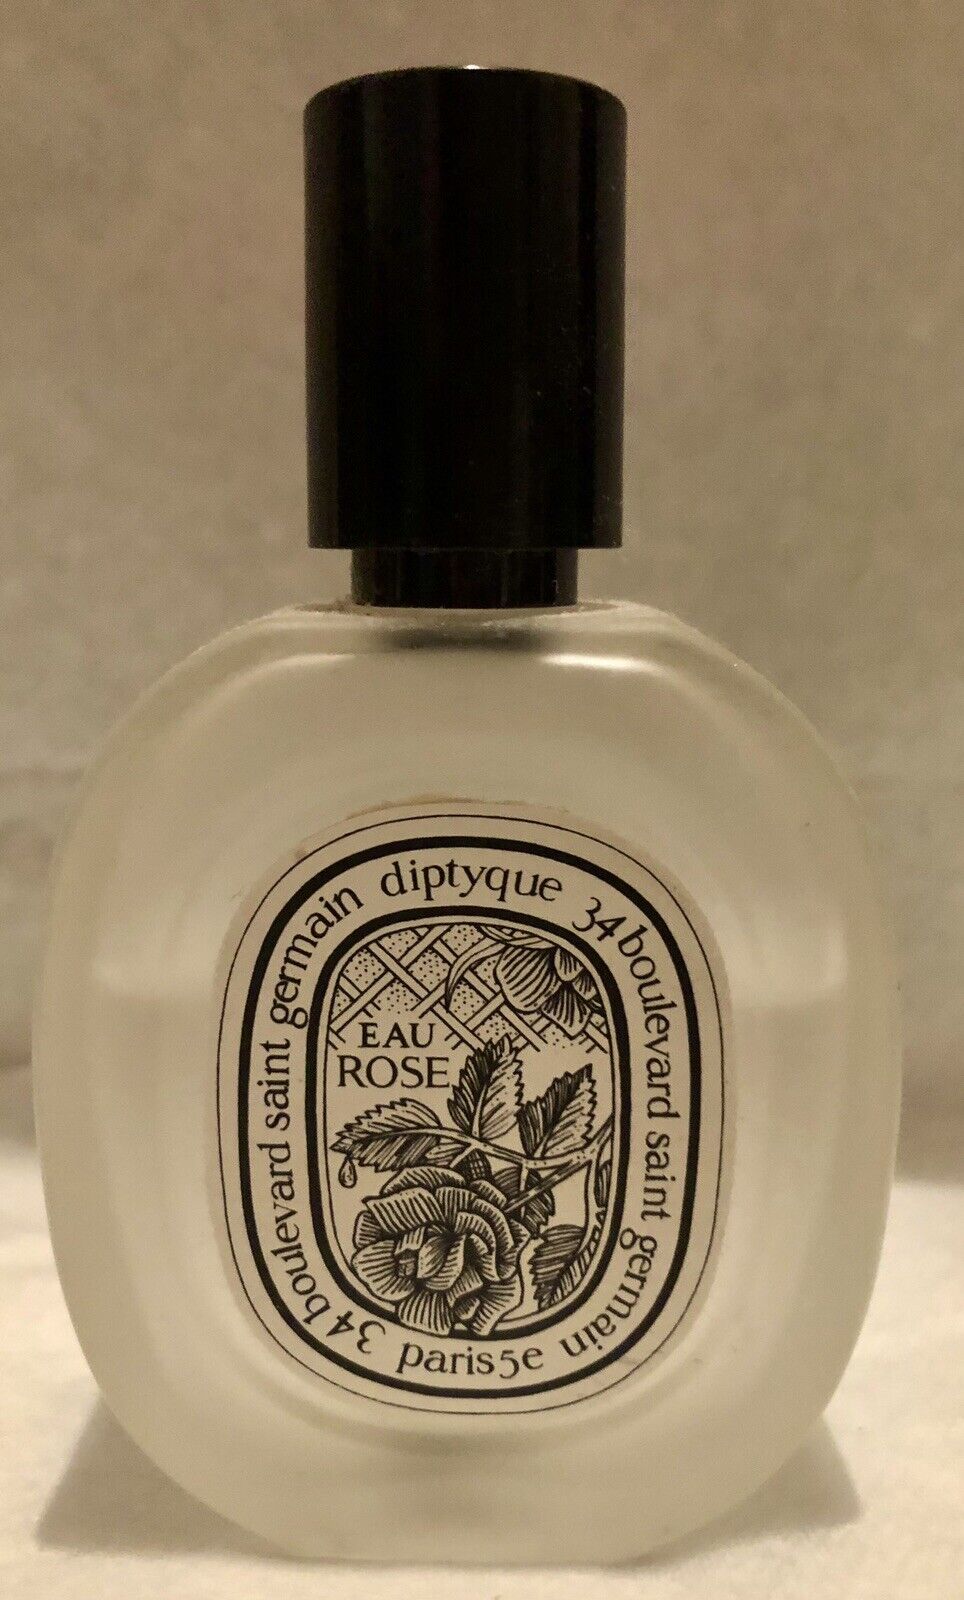 Diptyque Eau Rose  Parfum for Hair Mist 30ml (50% full bottle) see photos, descr